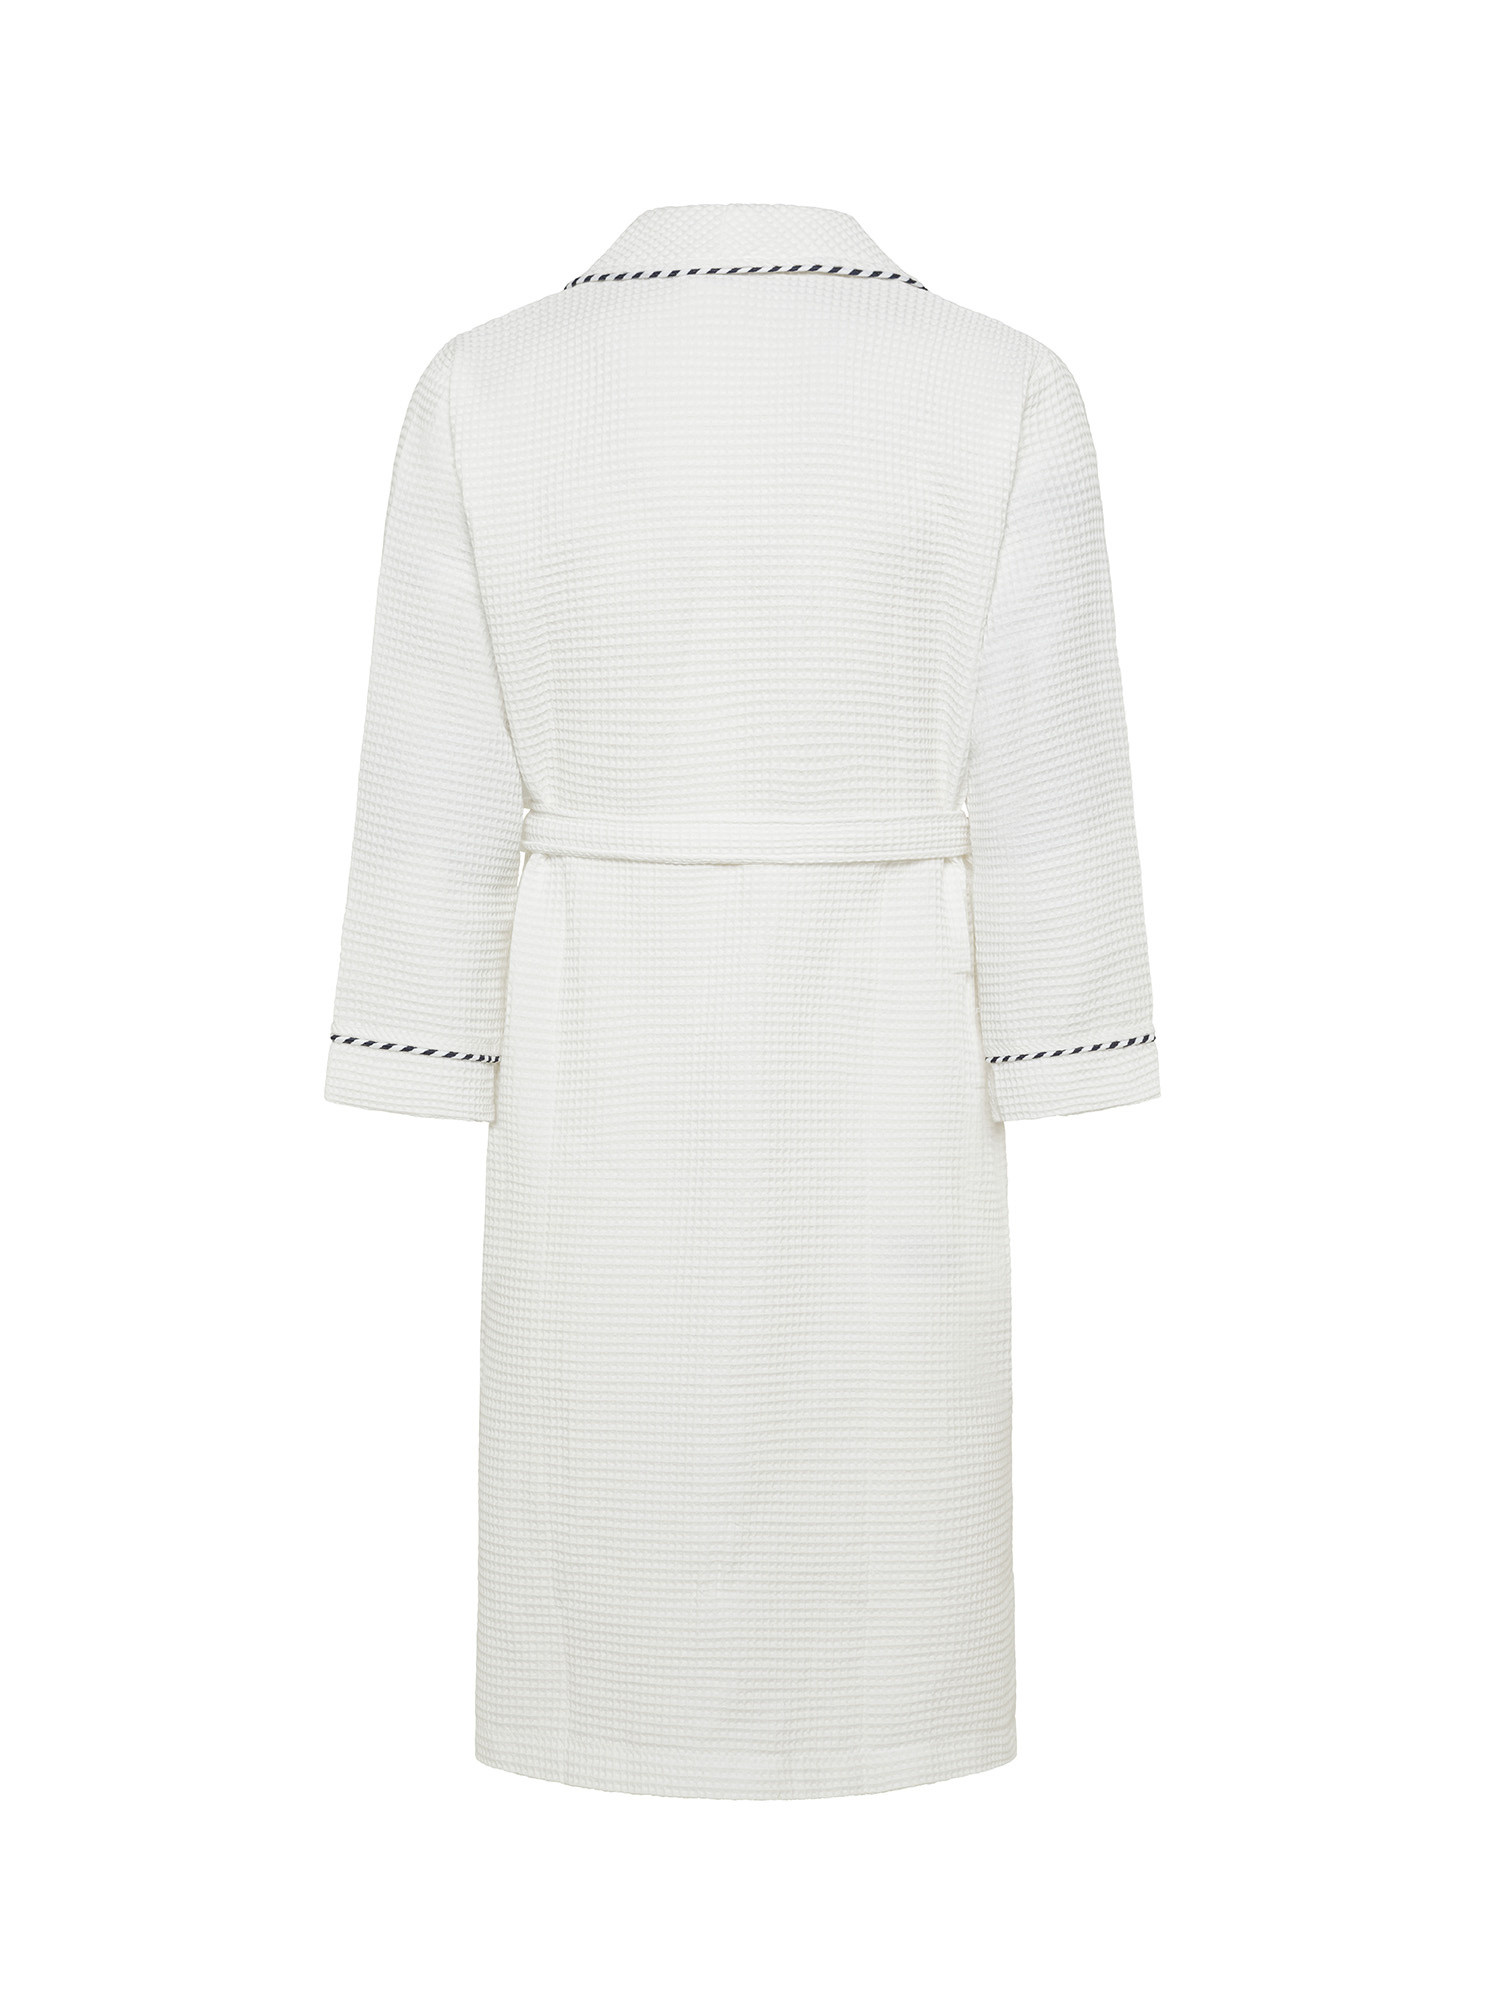 Piqué cotton bathrobe, White, large image number 1